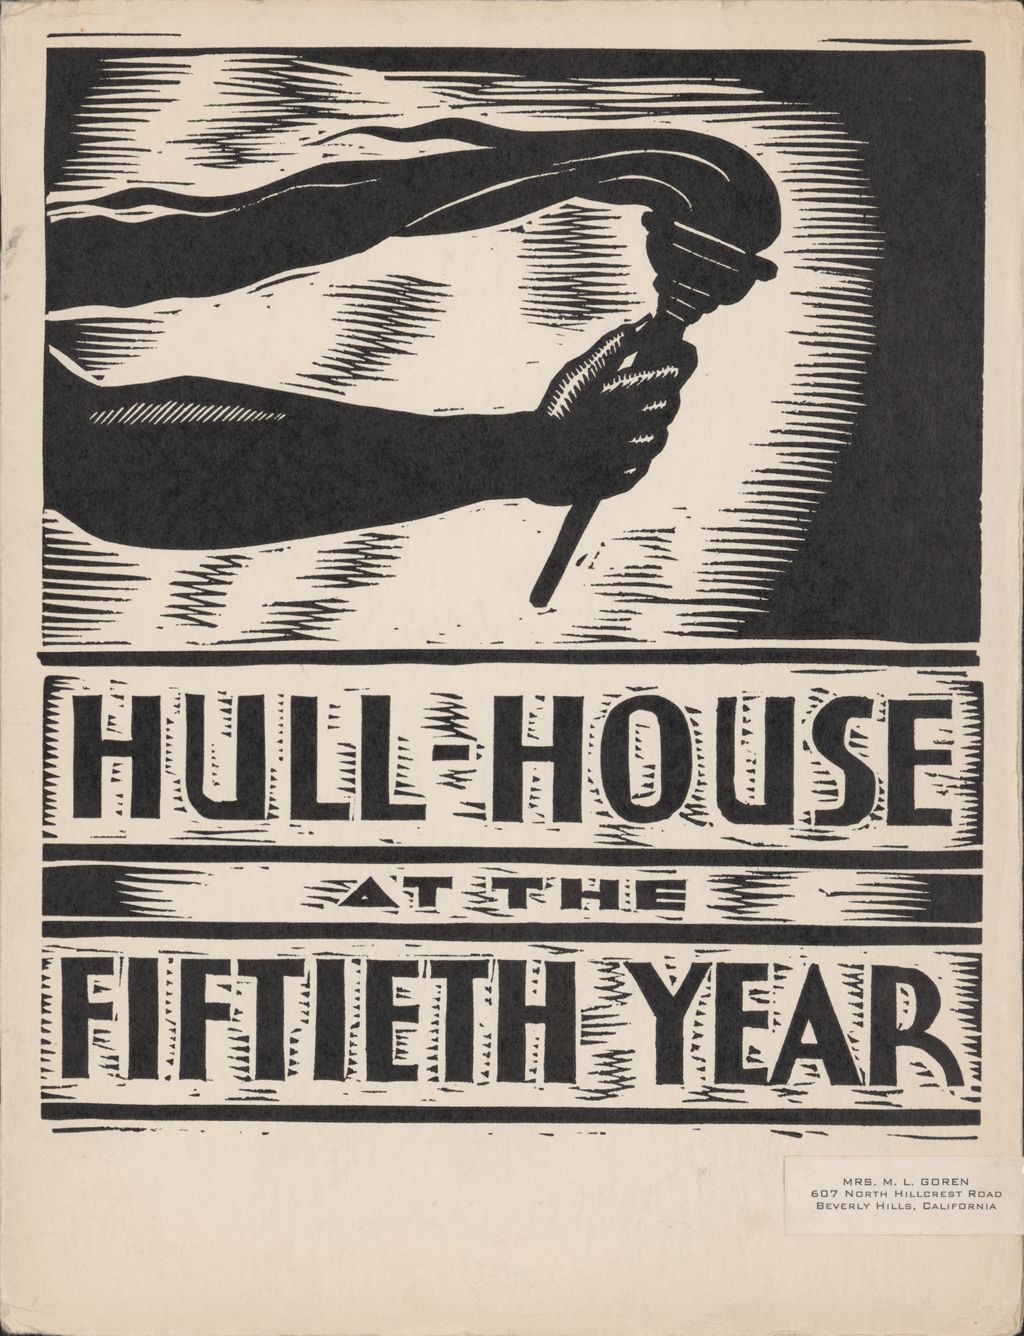 Hull-House Year Book, 1940